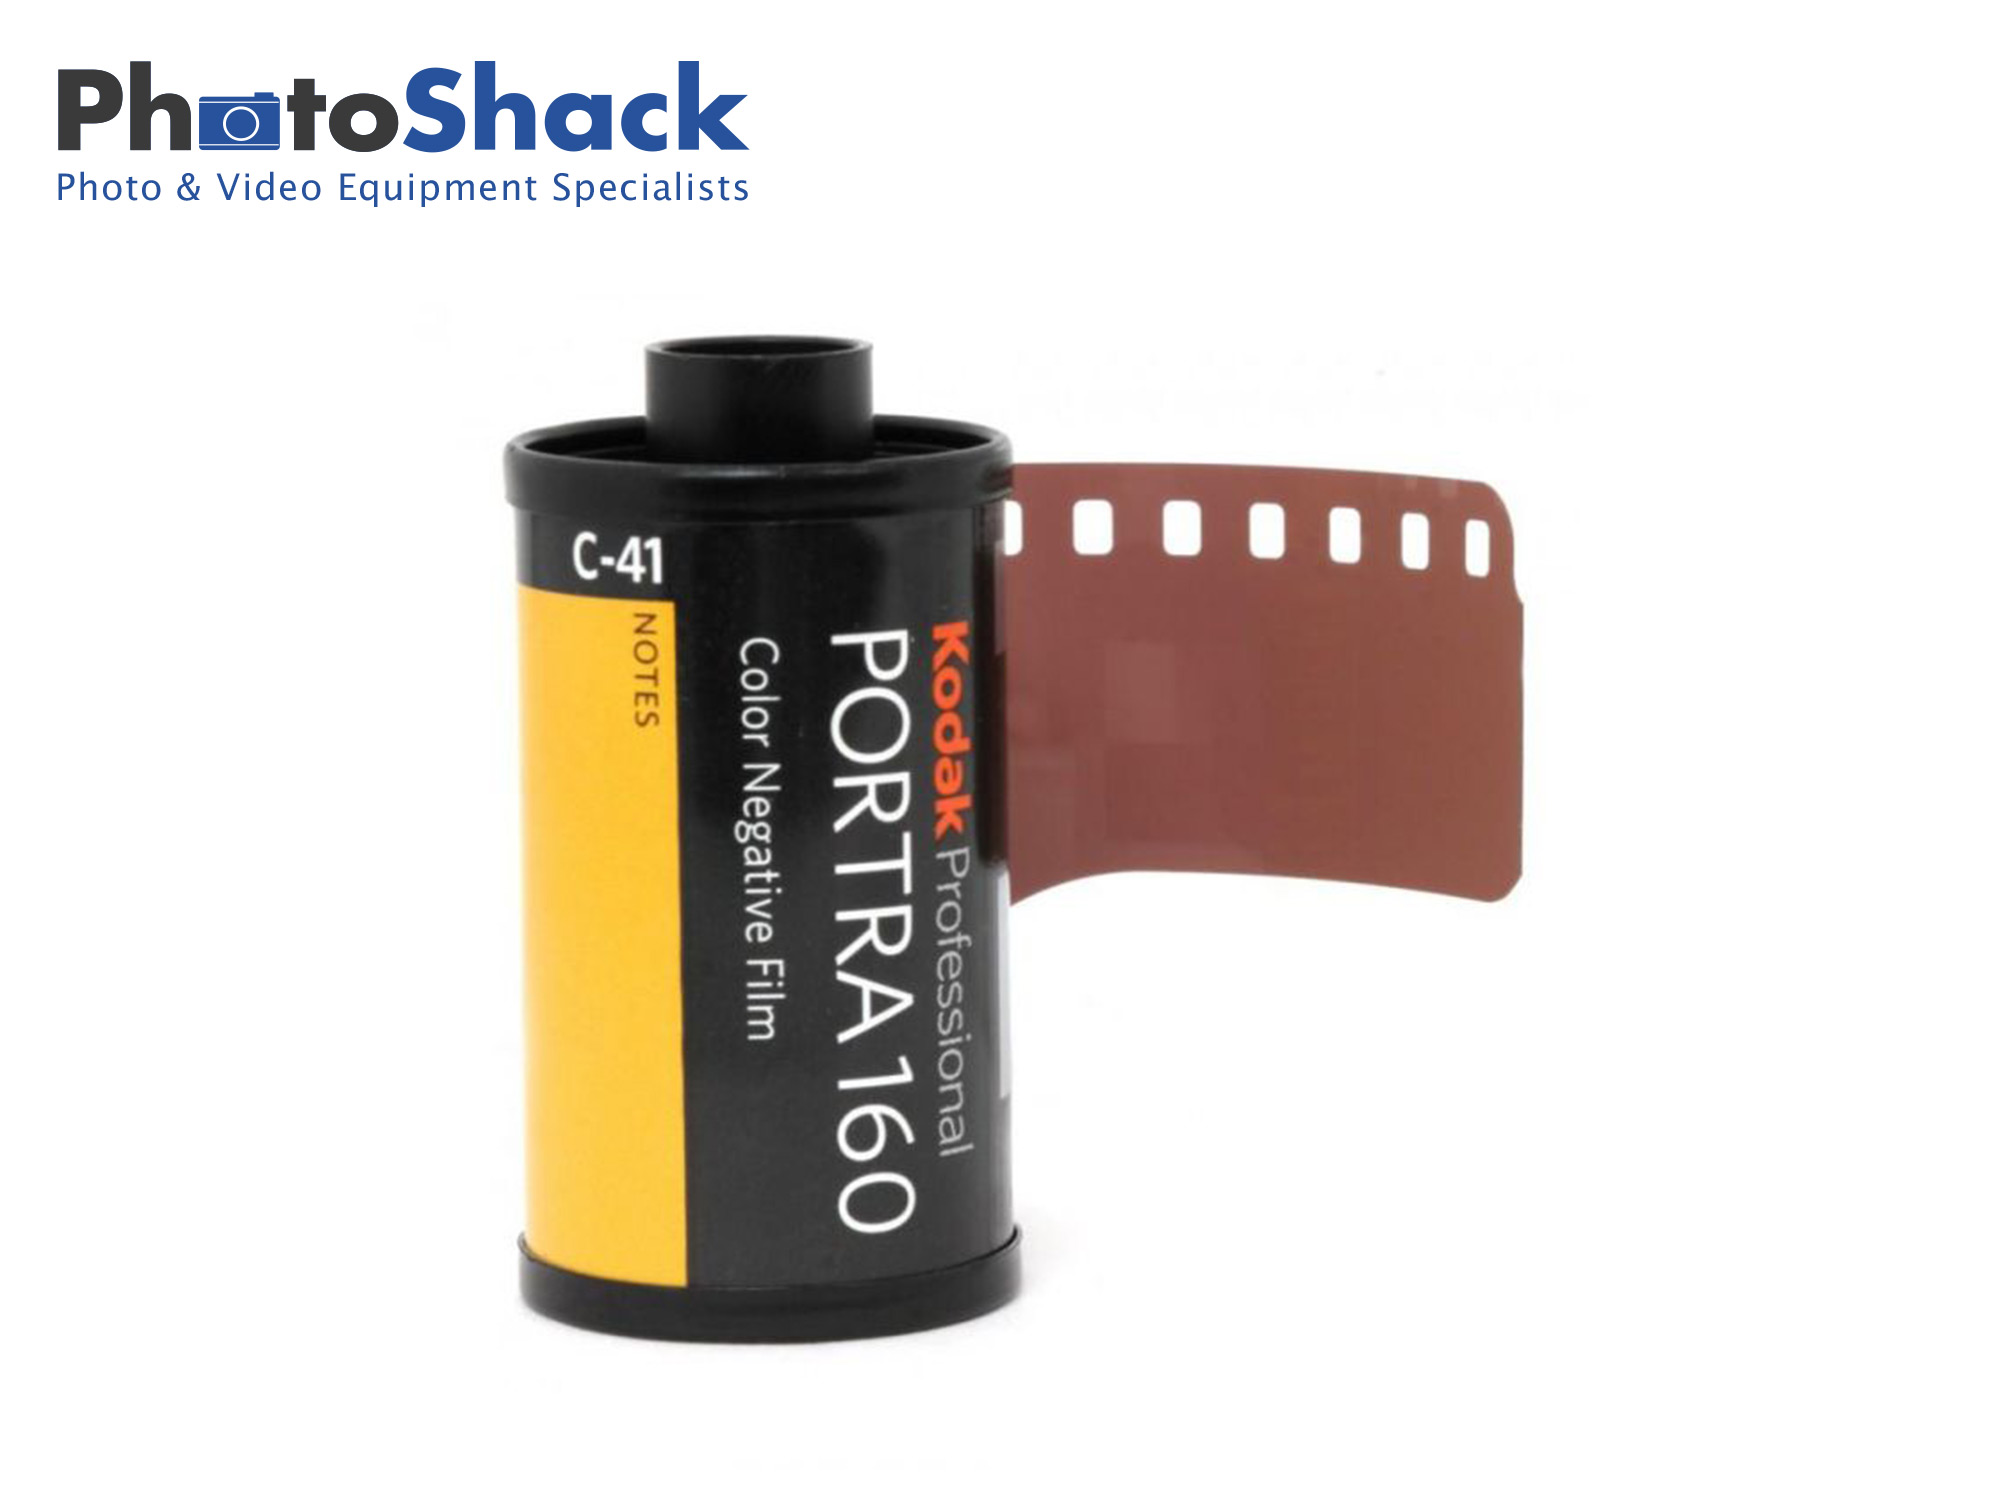 Kodak Portra 160 1 roll (No Box)